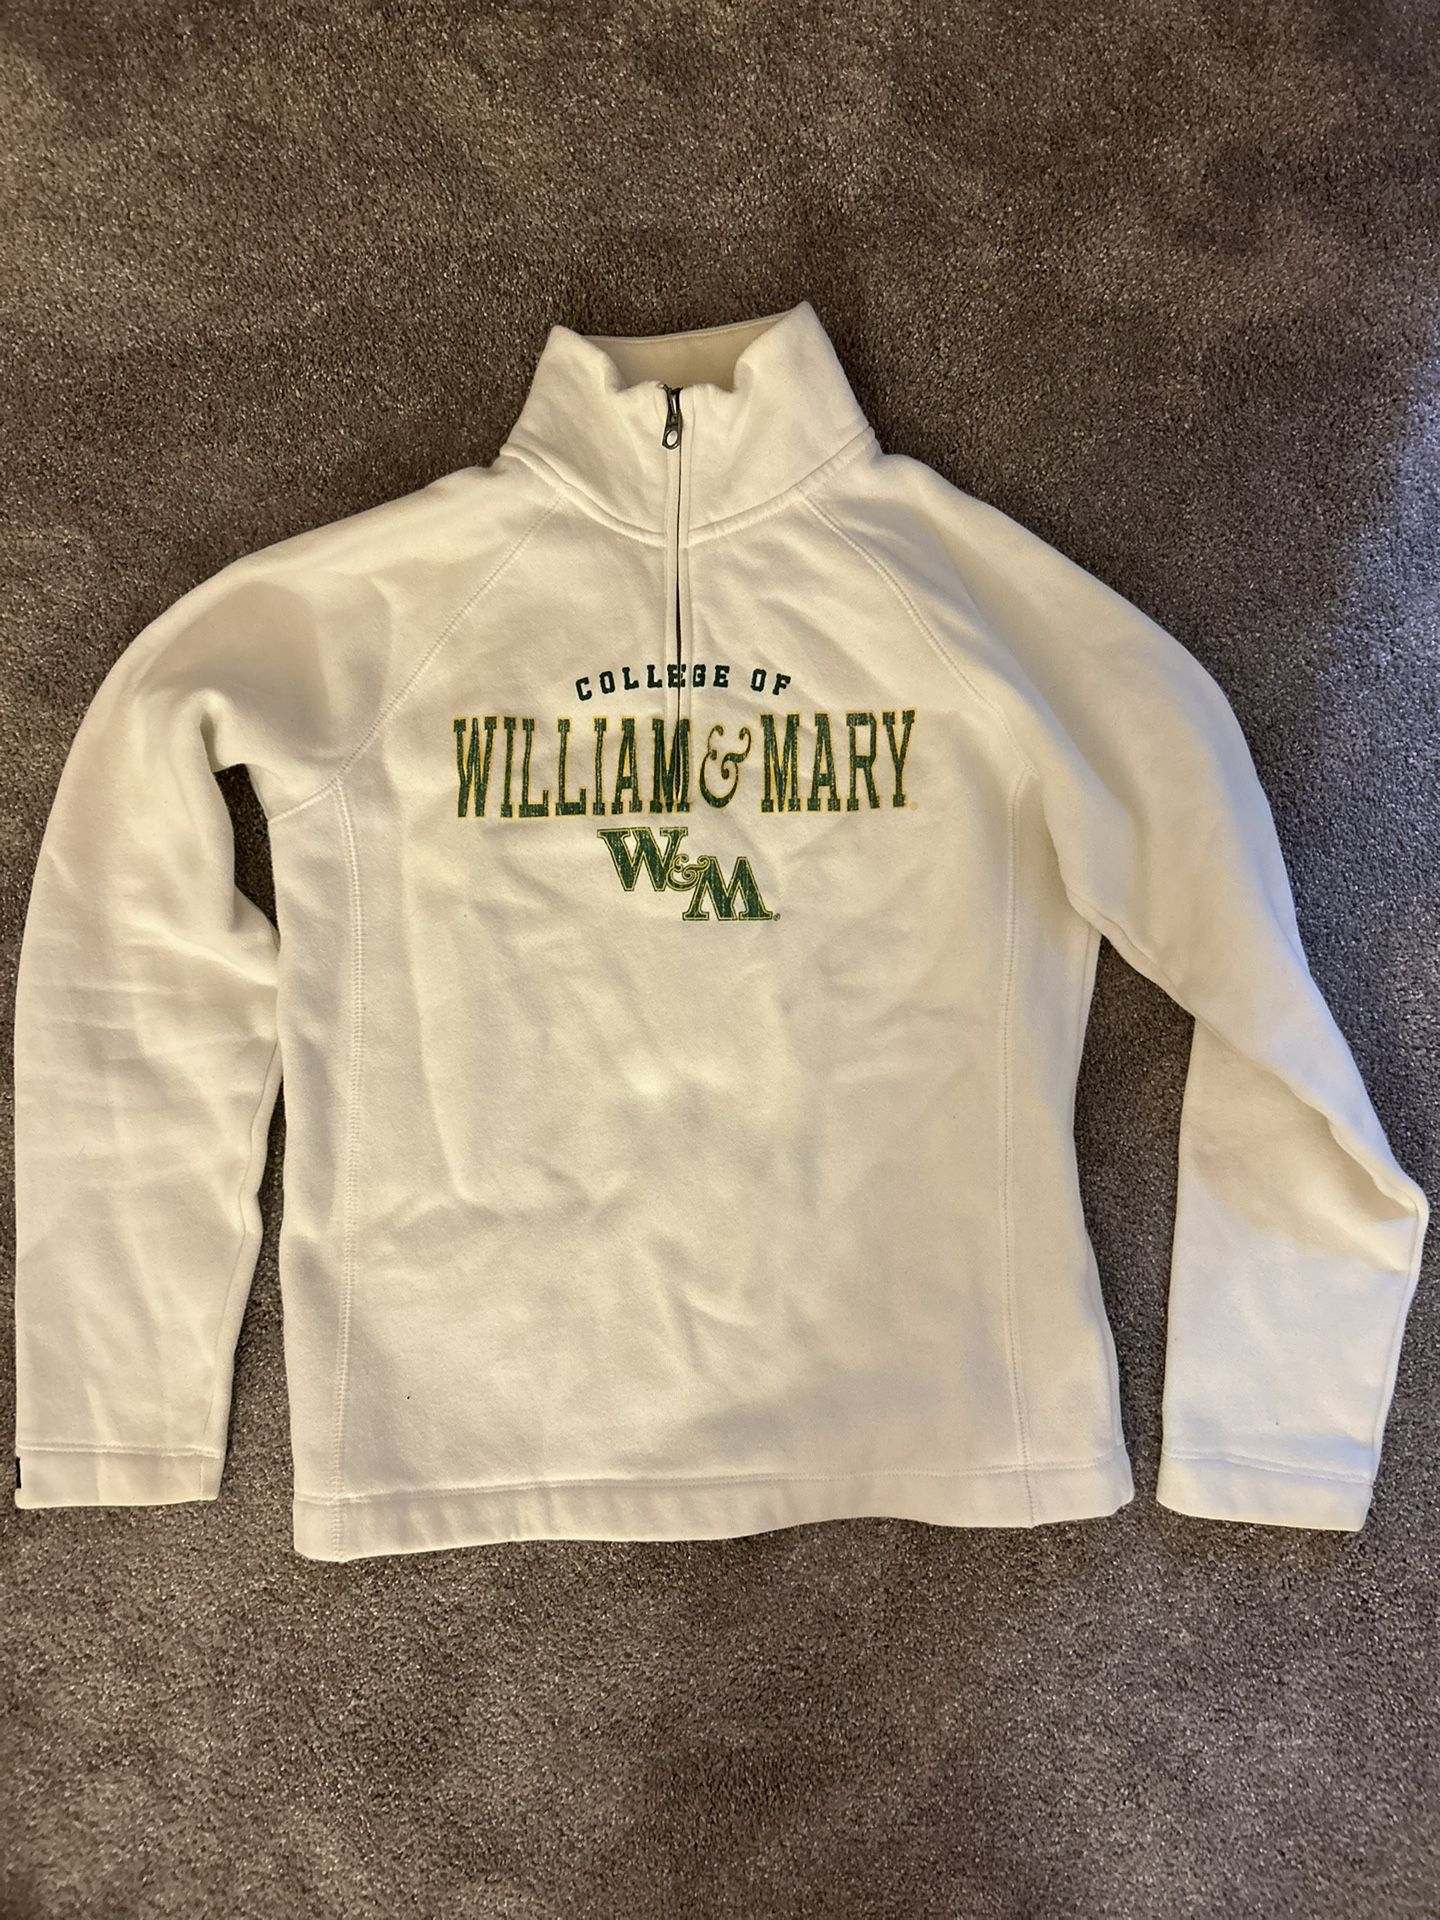 College of William & Mary Quarter Zip Sweatshirt Womens Small